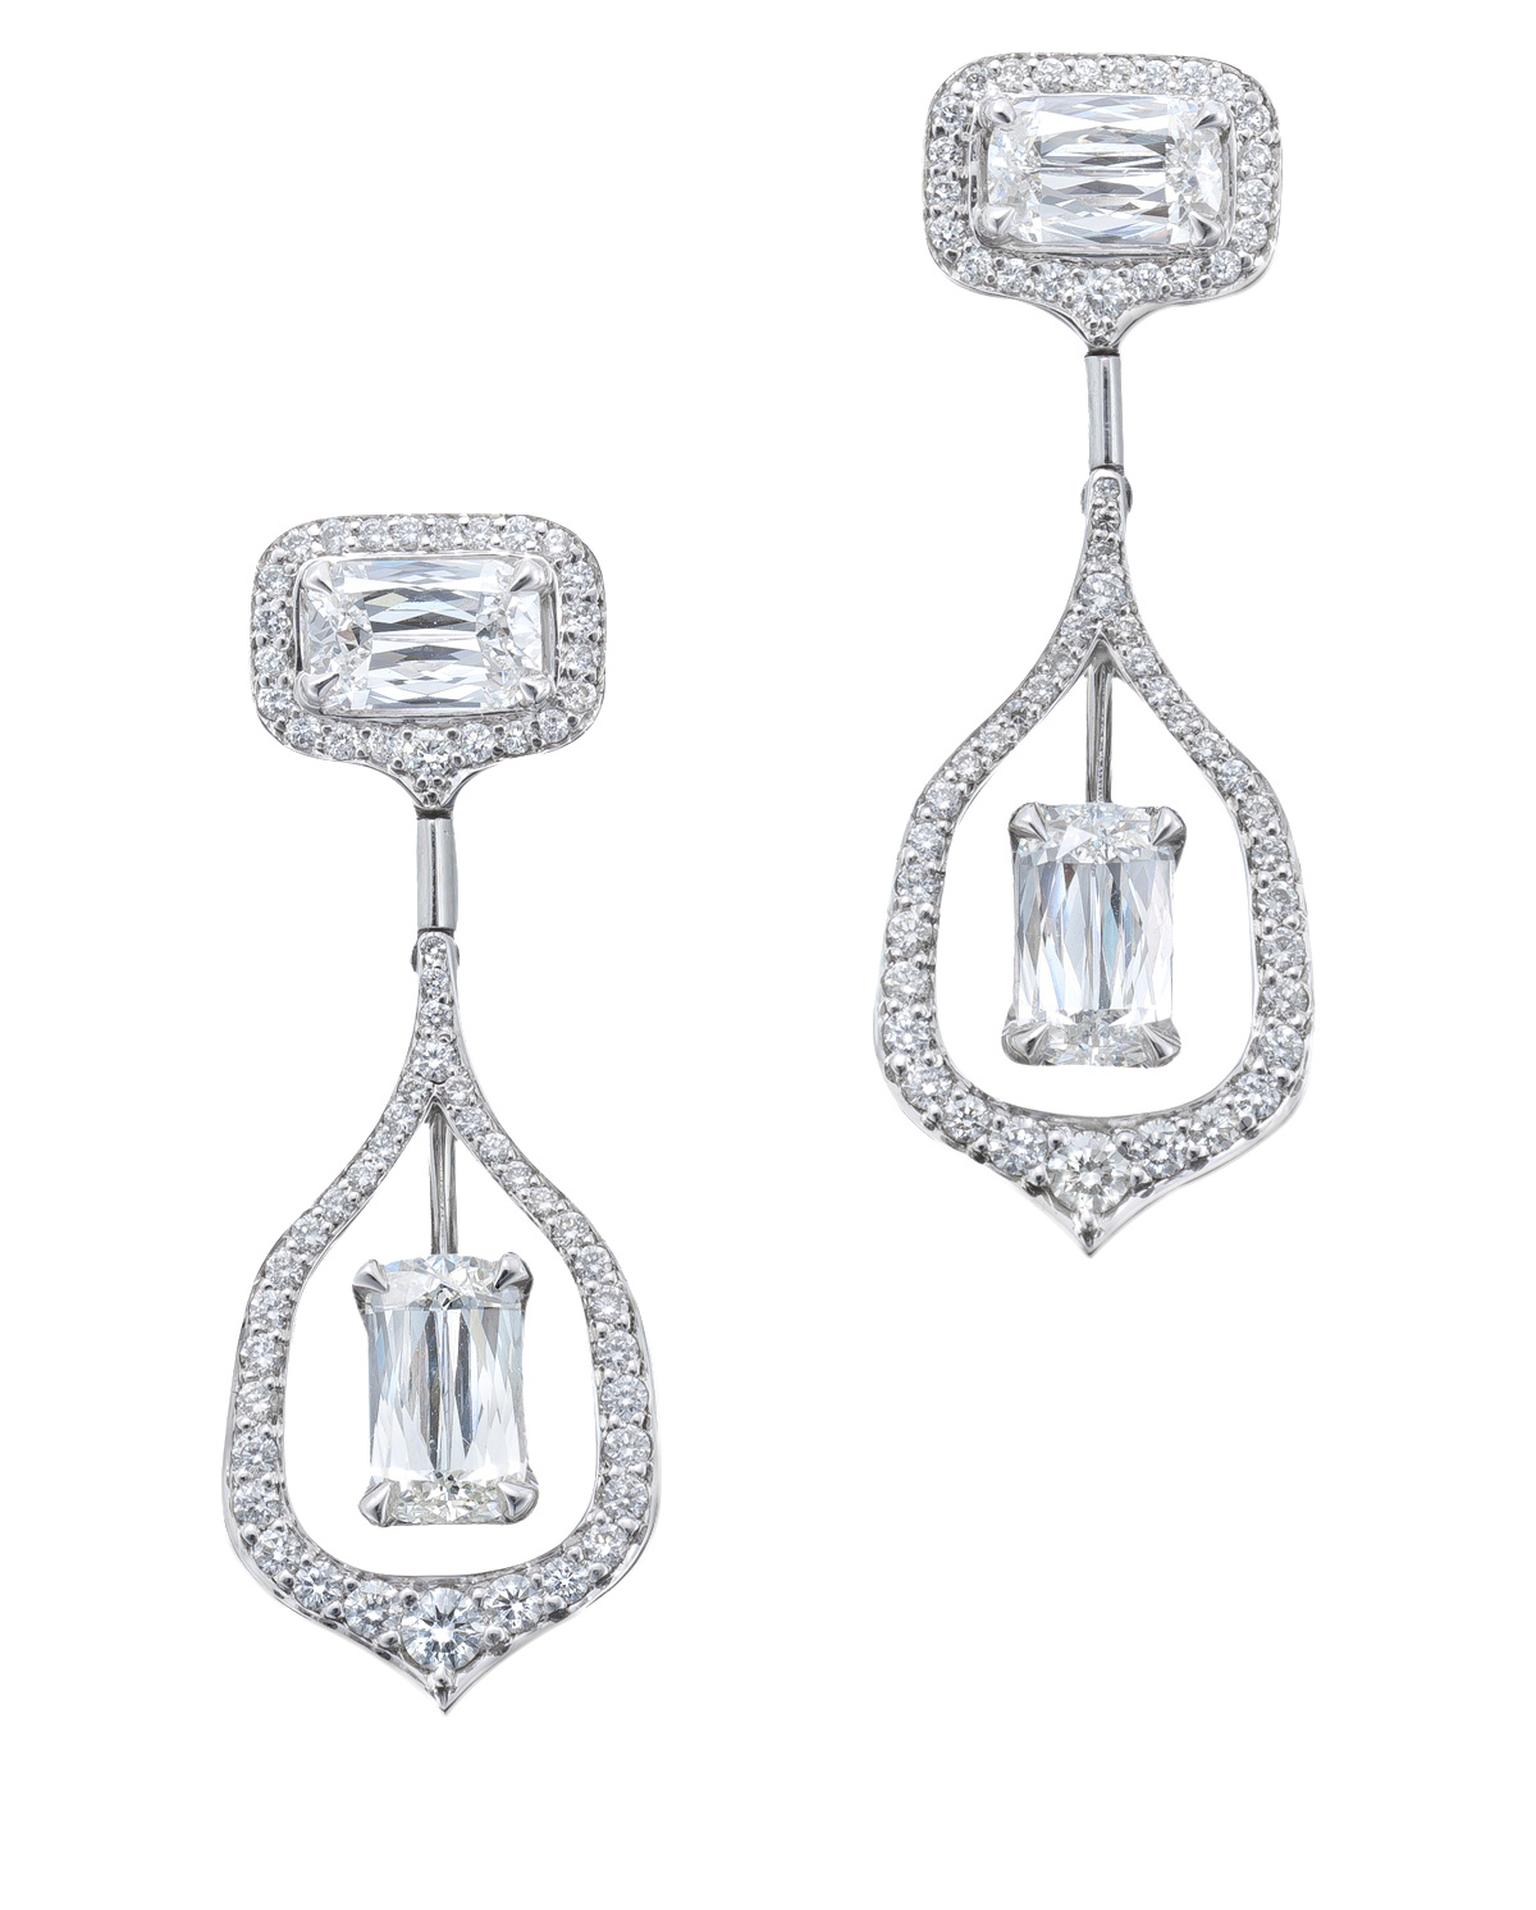 Wisteria Ashoka diamond ring | Boodles | The Jewellery Editor